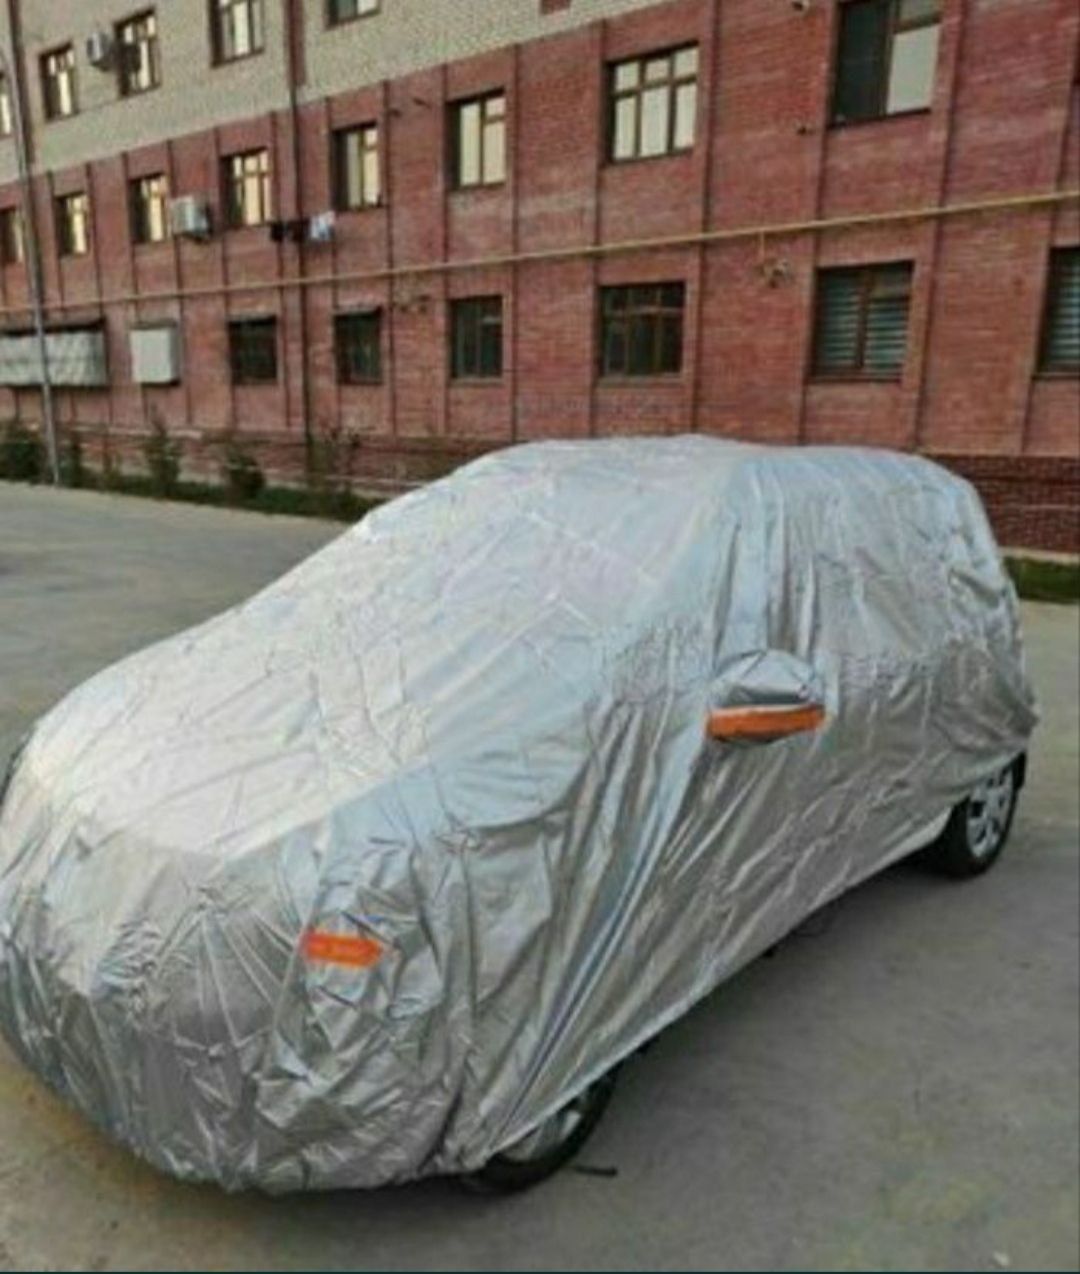 Avto tent chexol 100% sifatli material Toshkent